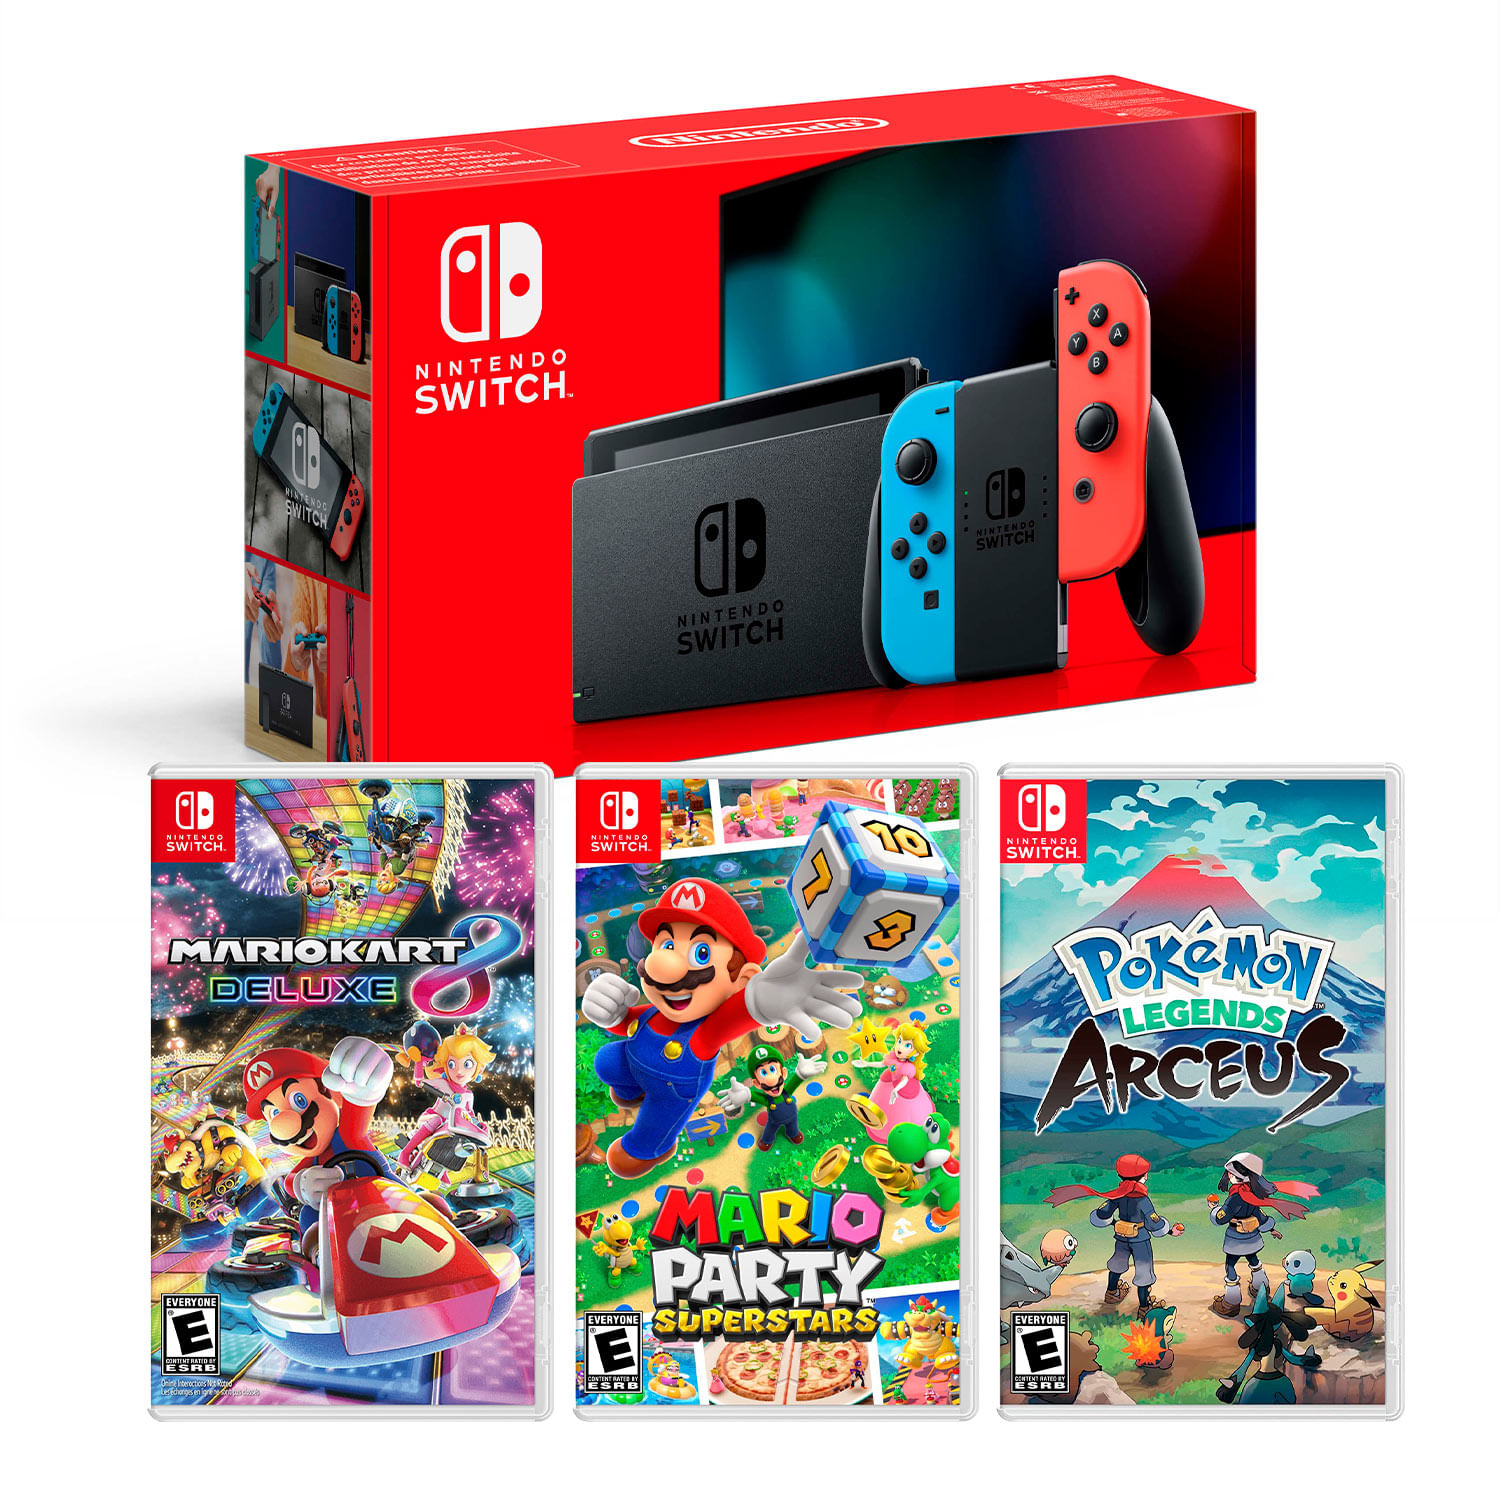 Consola Nintendo Switch Neon 2019 + Mario Kart 8 + Mario Party Superstar + Pokémon Legends Arceus